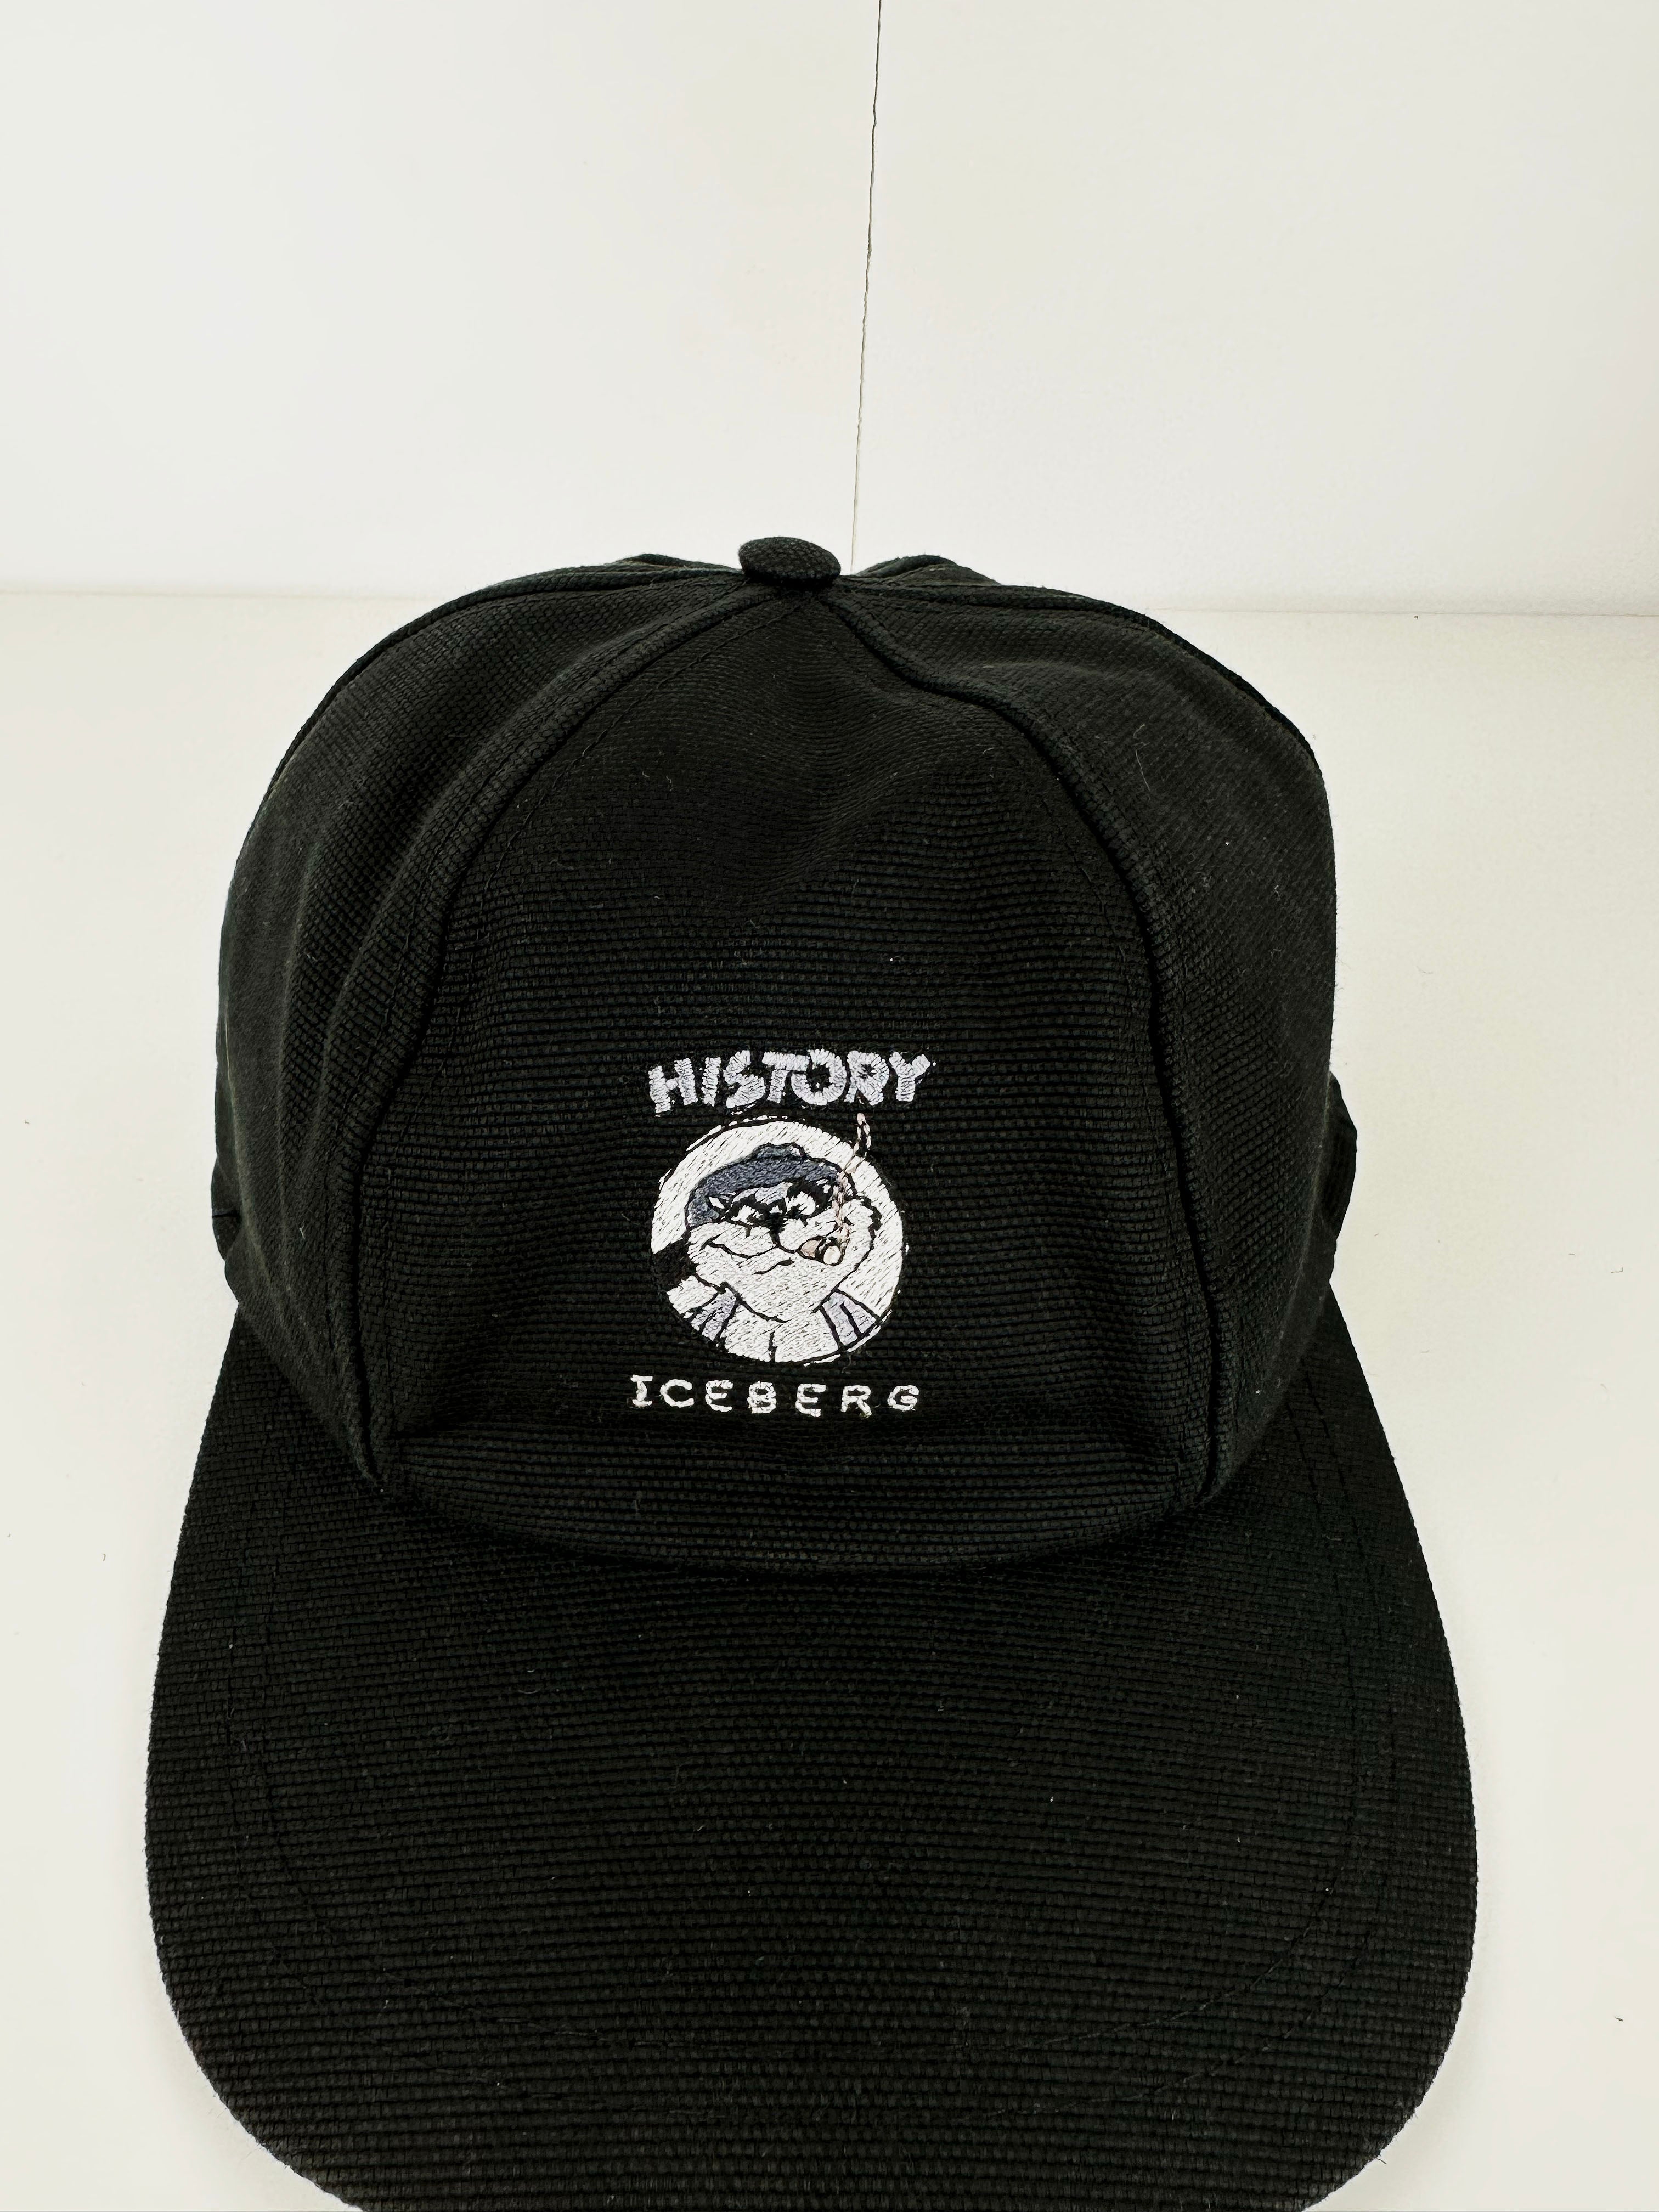 Iceberg History Black Hat 2001